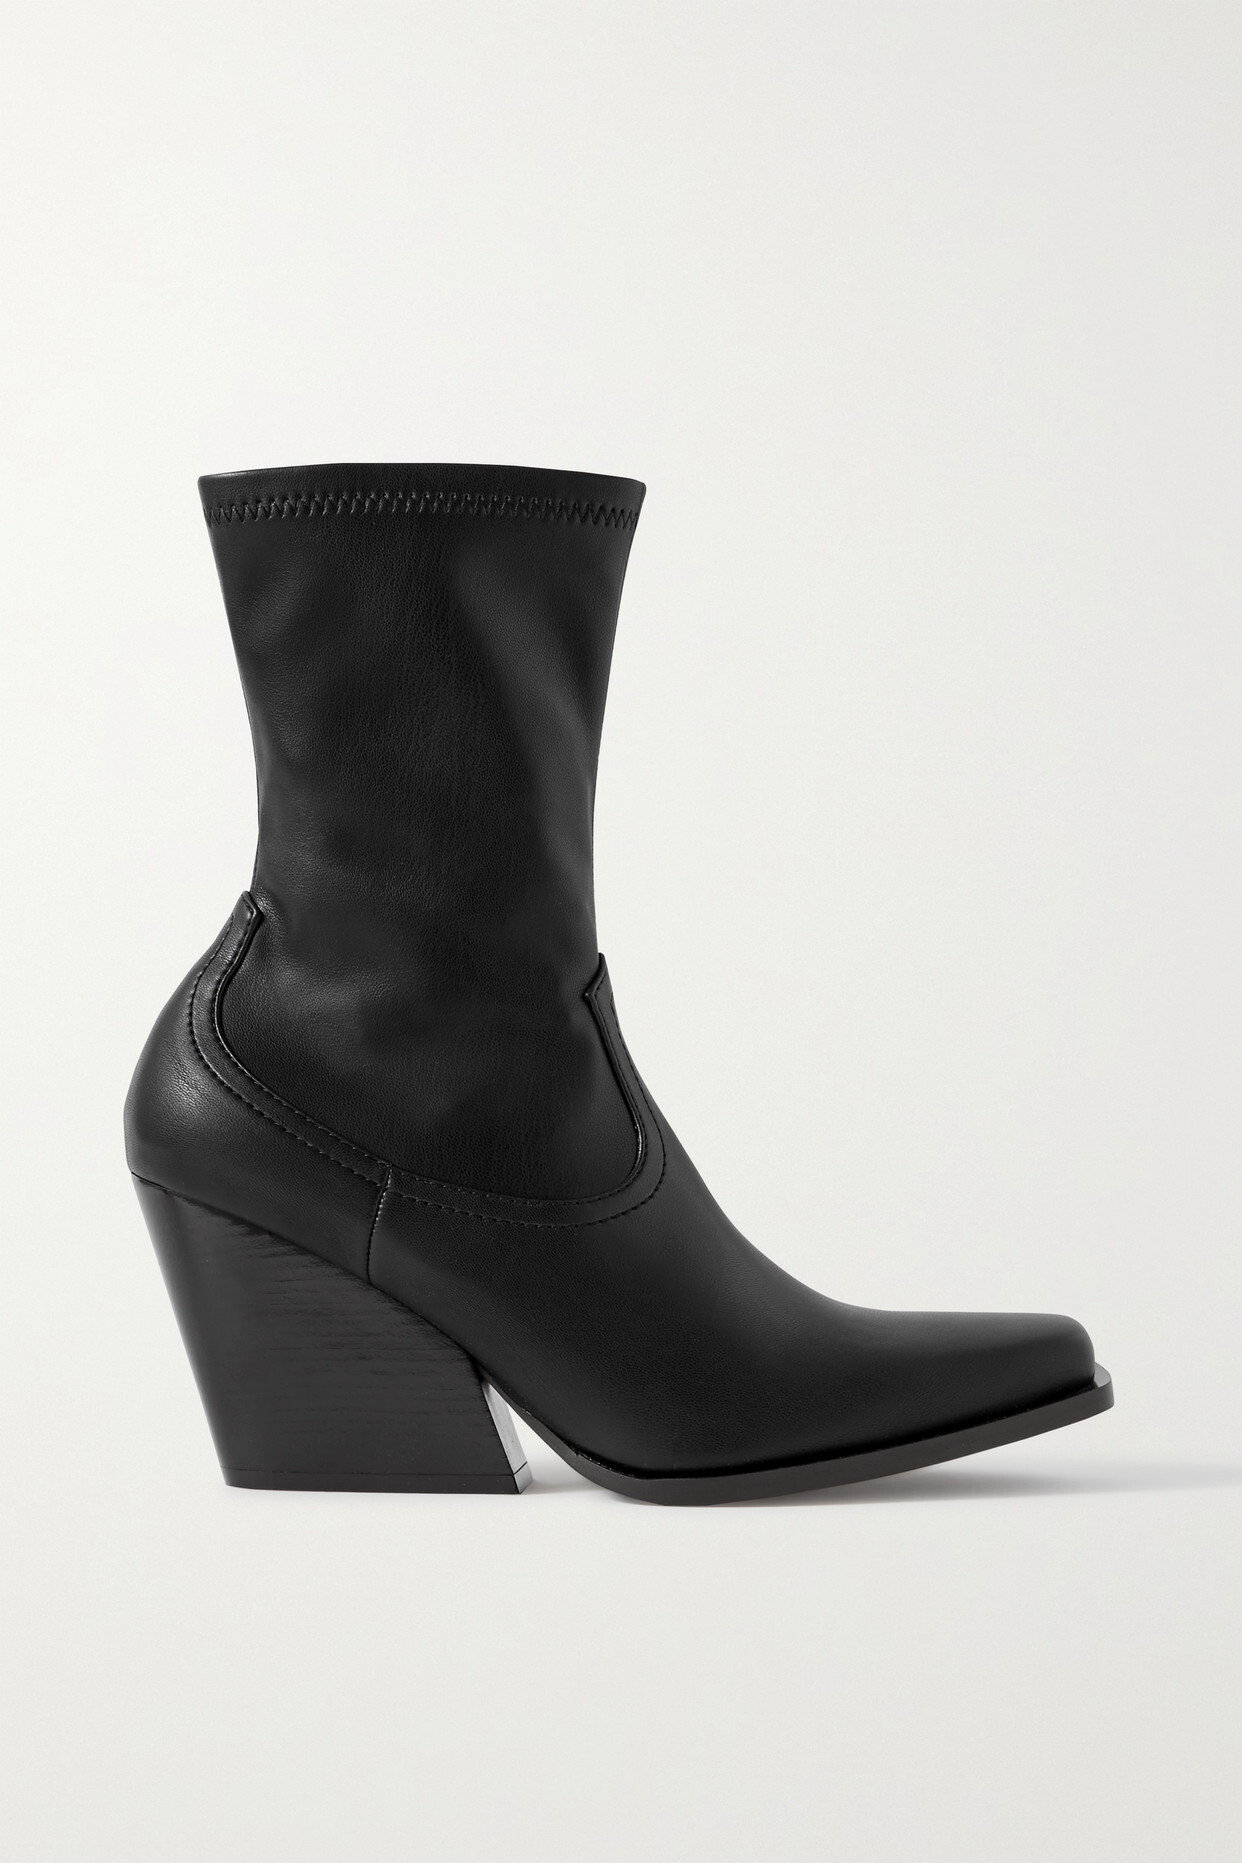 Stella McCartney - Cowboy Vegetarian Leather Ankle Boots - Black